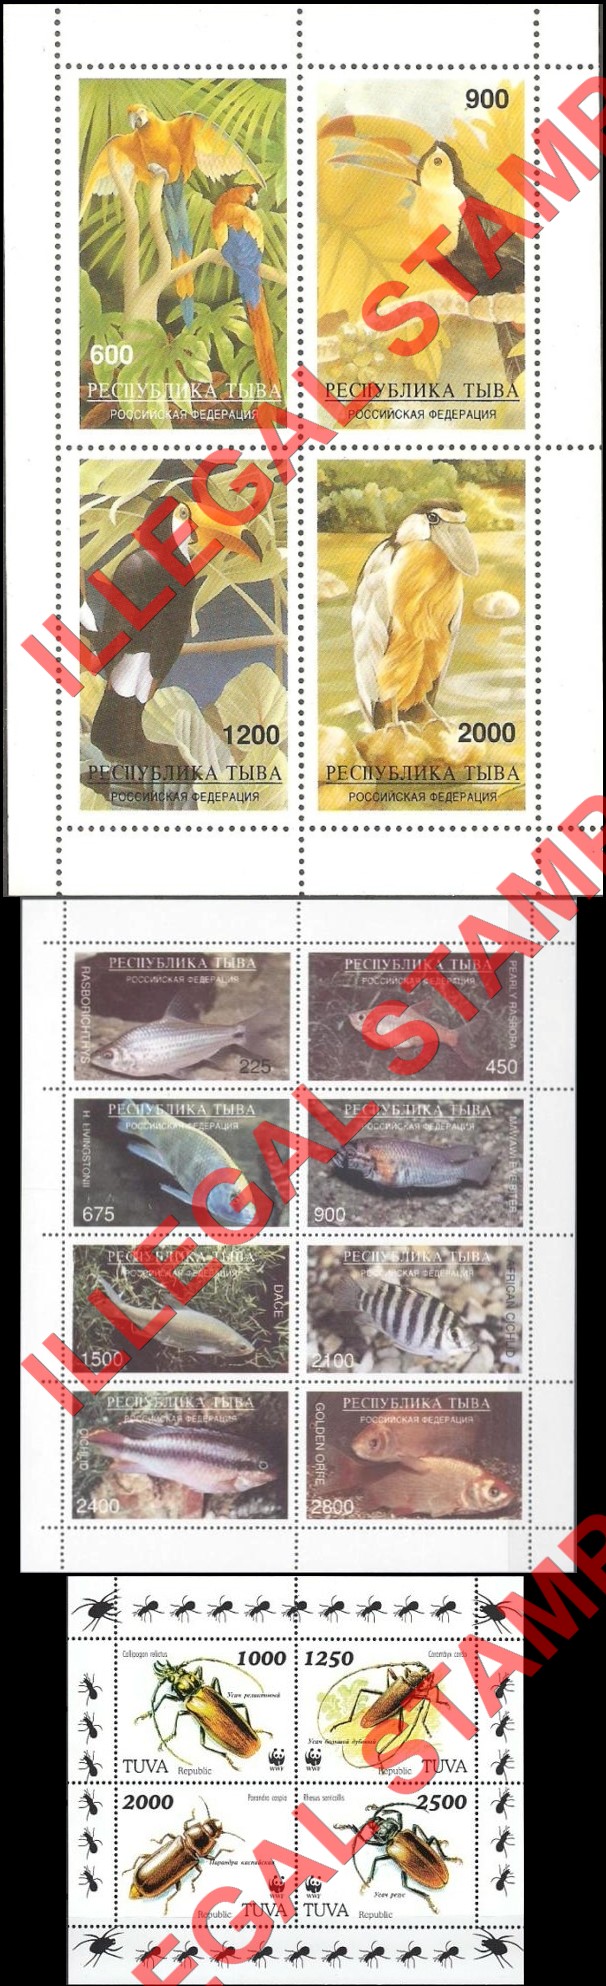 Republic of Tuva 1997 Counterfeit Illegal Stamps (Part 3)